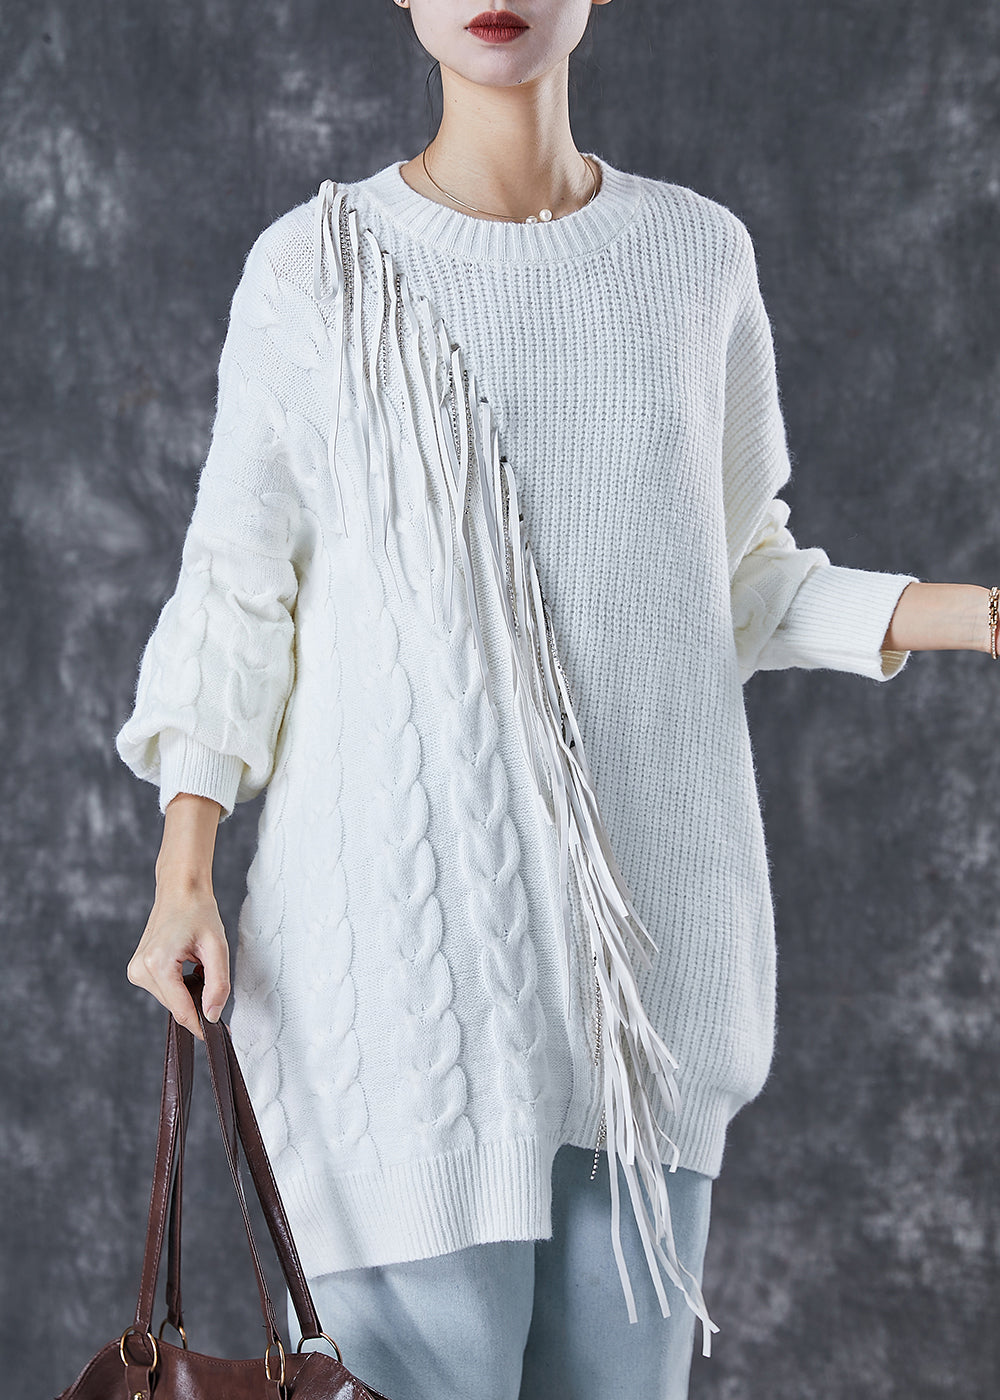 Classy White Tasseled Patchwork Knit Knit Sweater Dress Winter